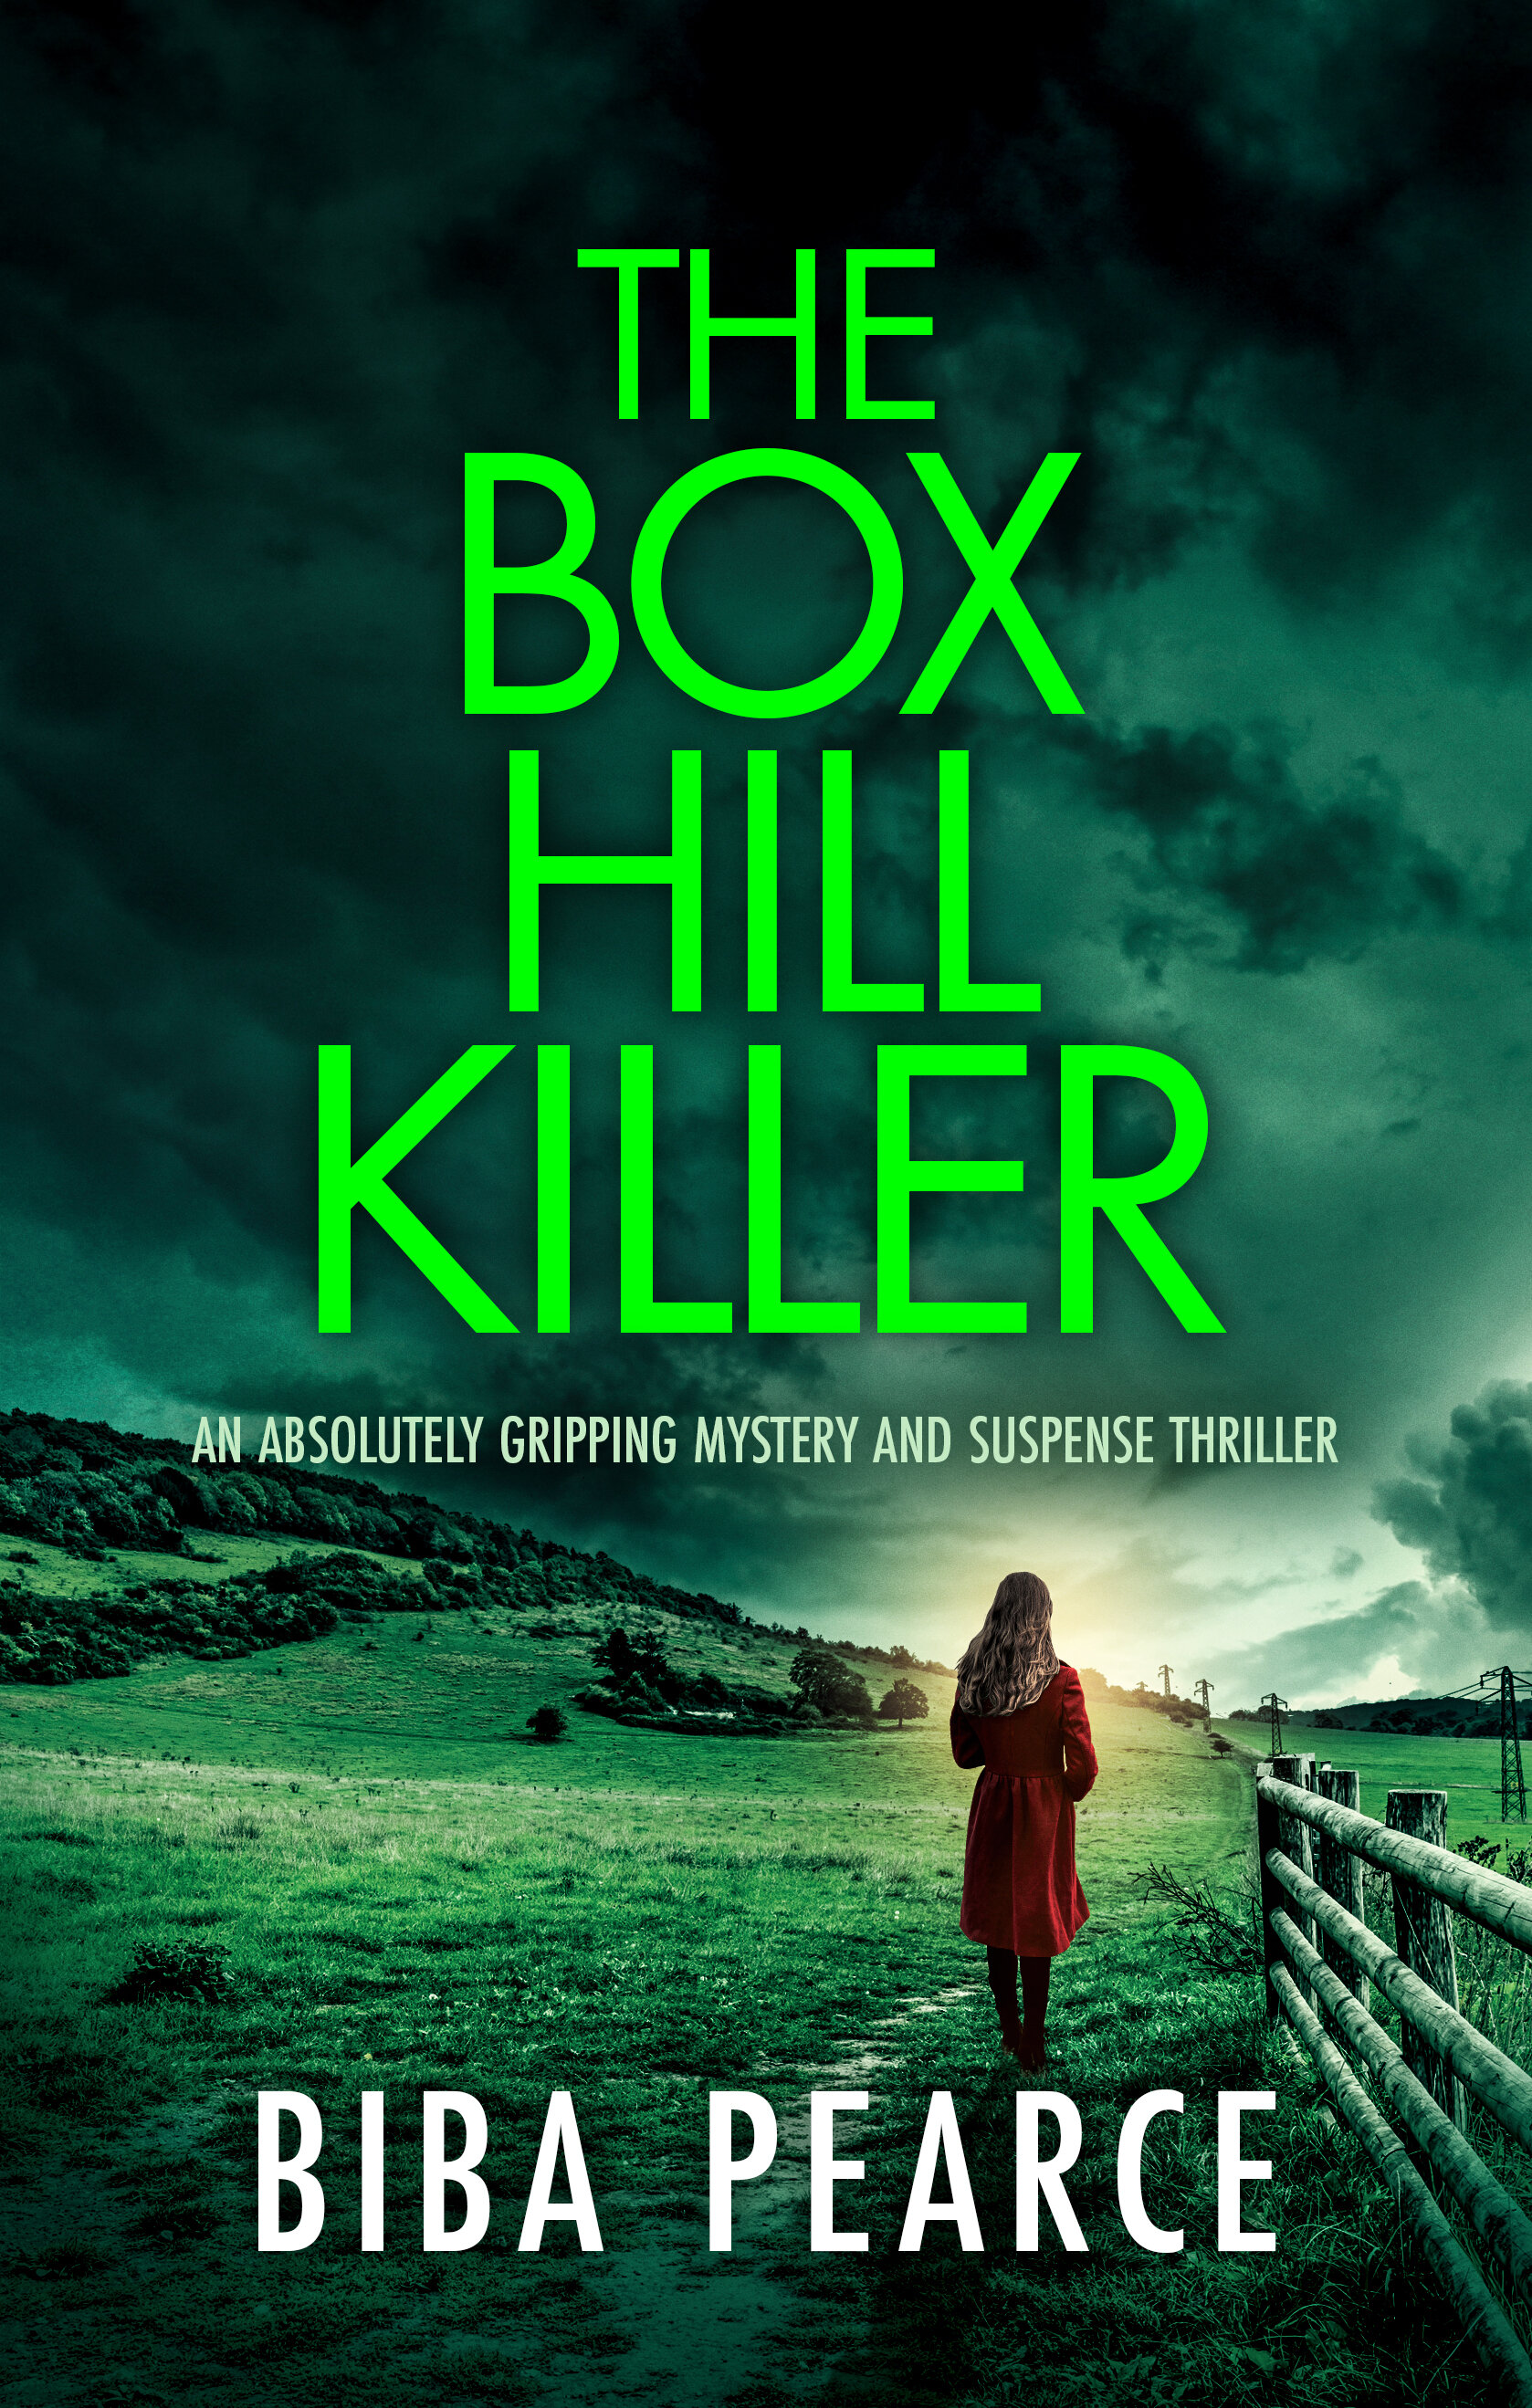 THE BOX HILL KILLER Publish.jpg